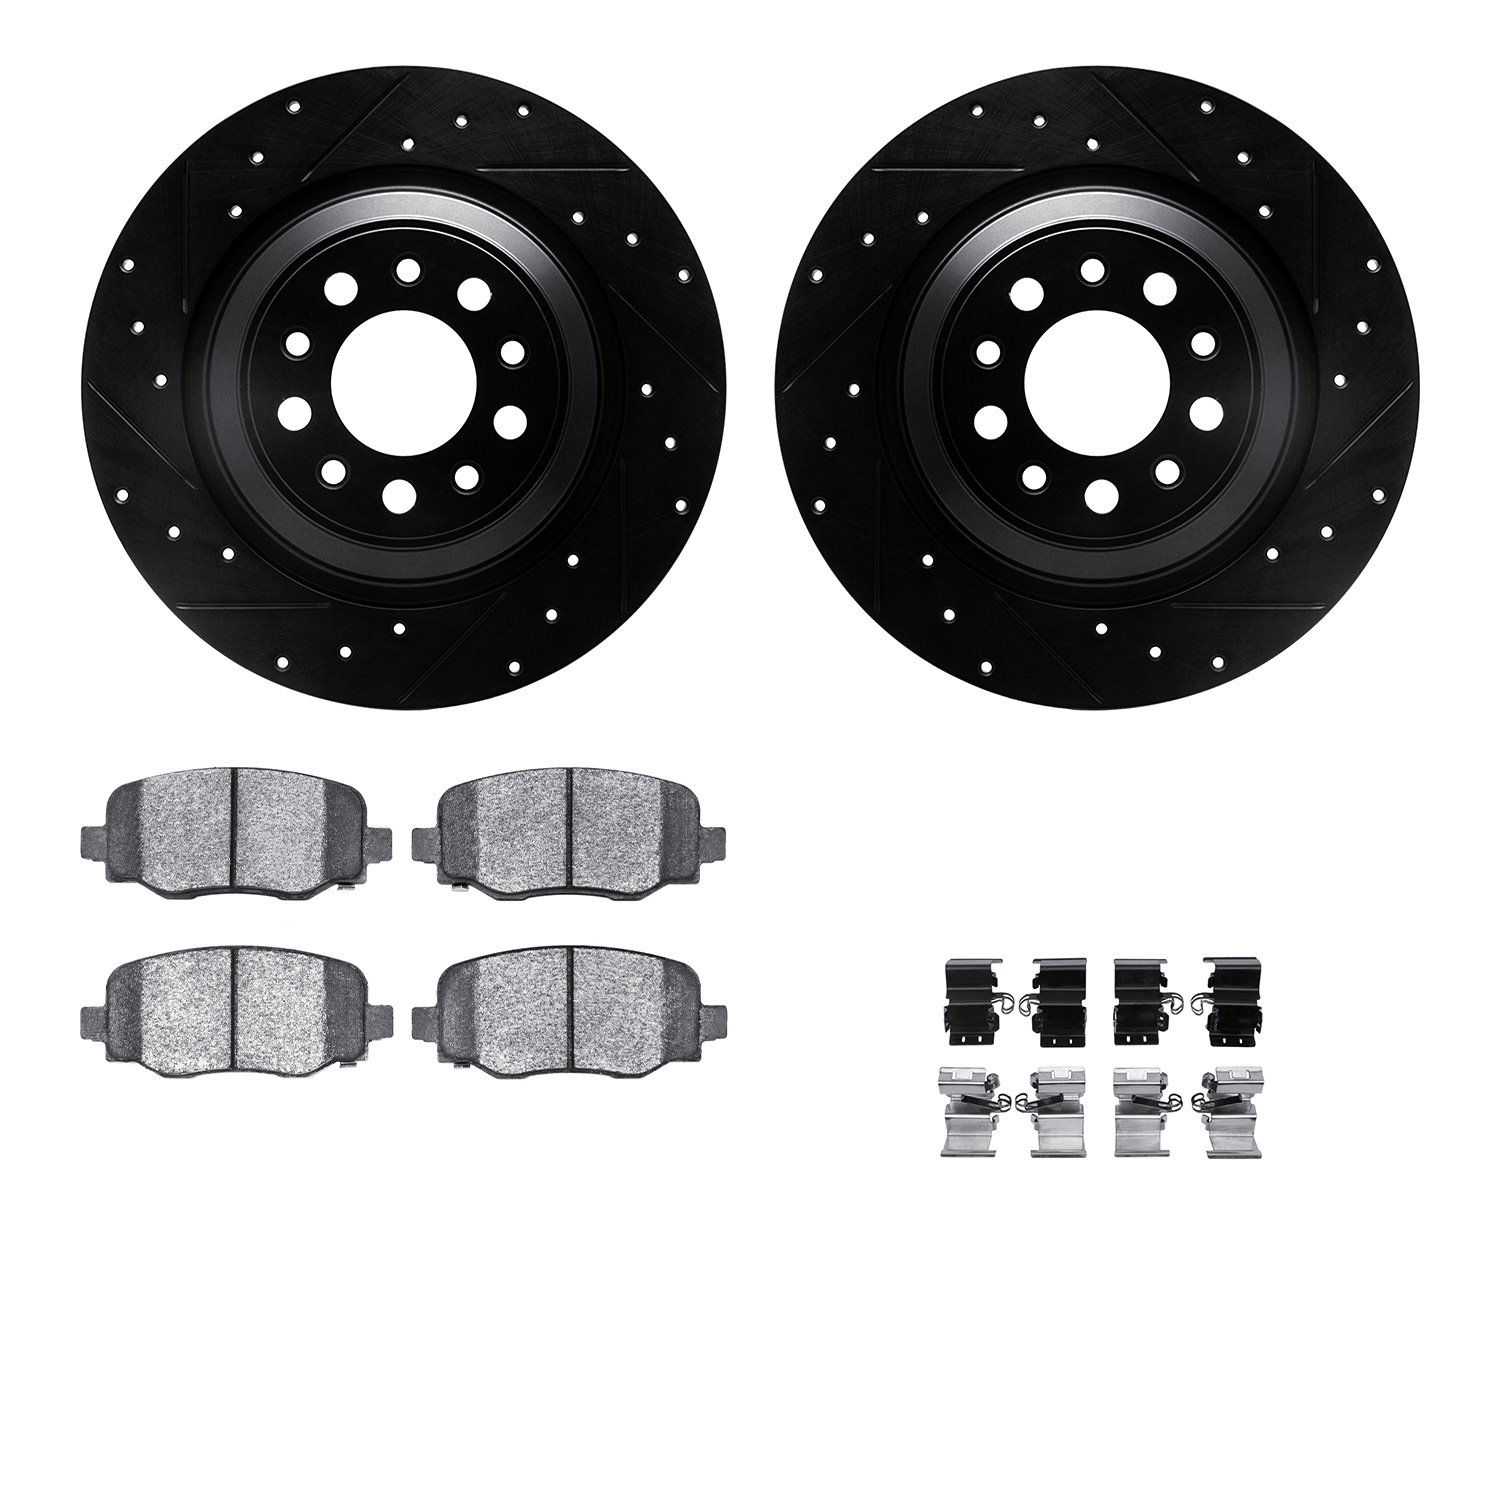 8312-42044 Drilled/Slotted Brake Rotors with 3000-Series Ceramic Brake Pads Kit & Hardware [Black], Fits Select Mopar, Position: